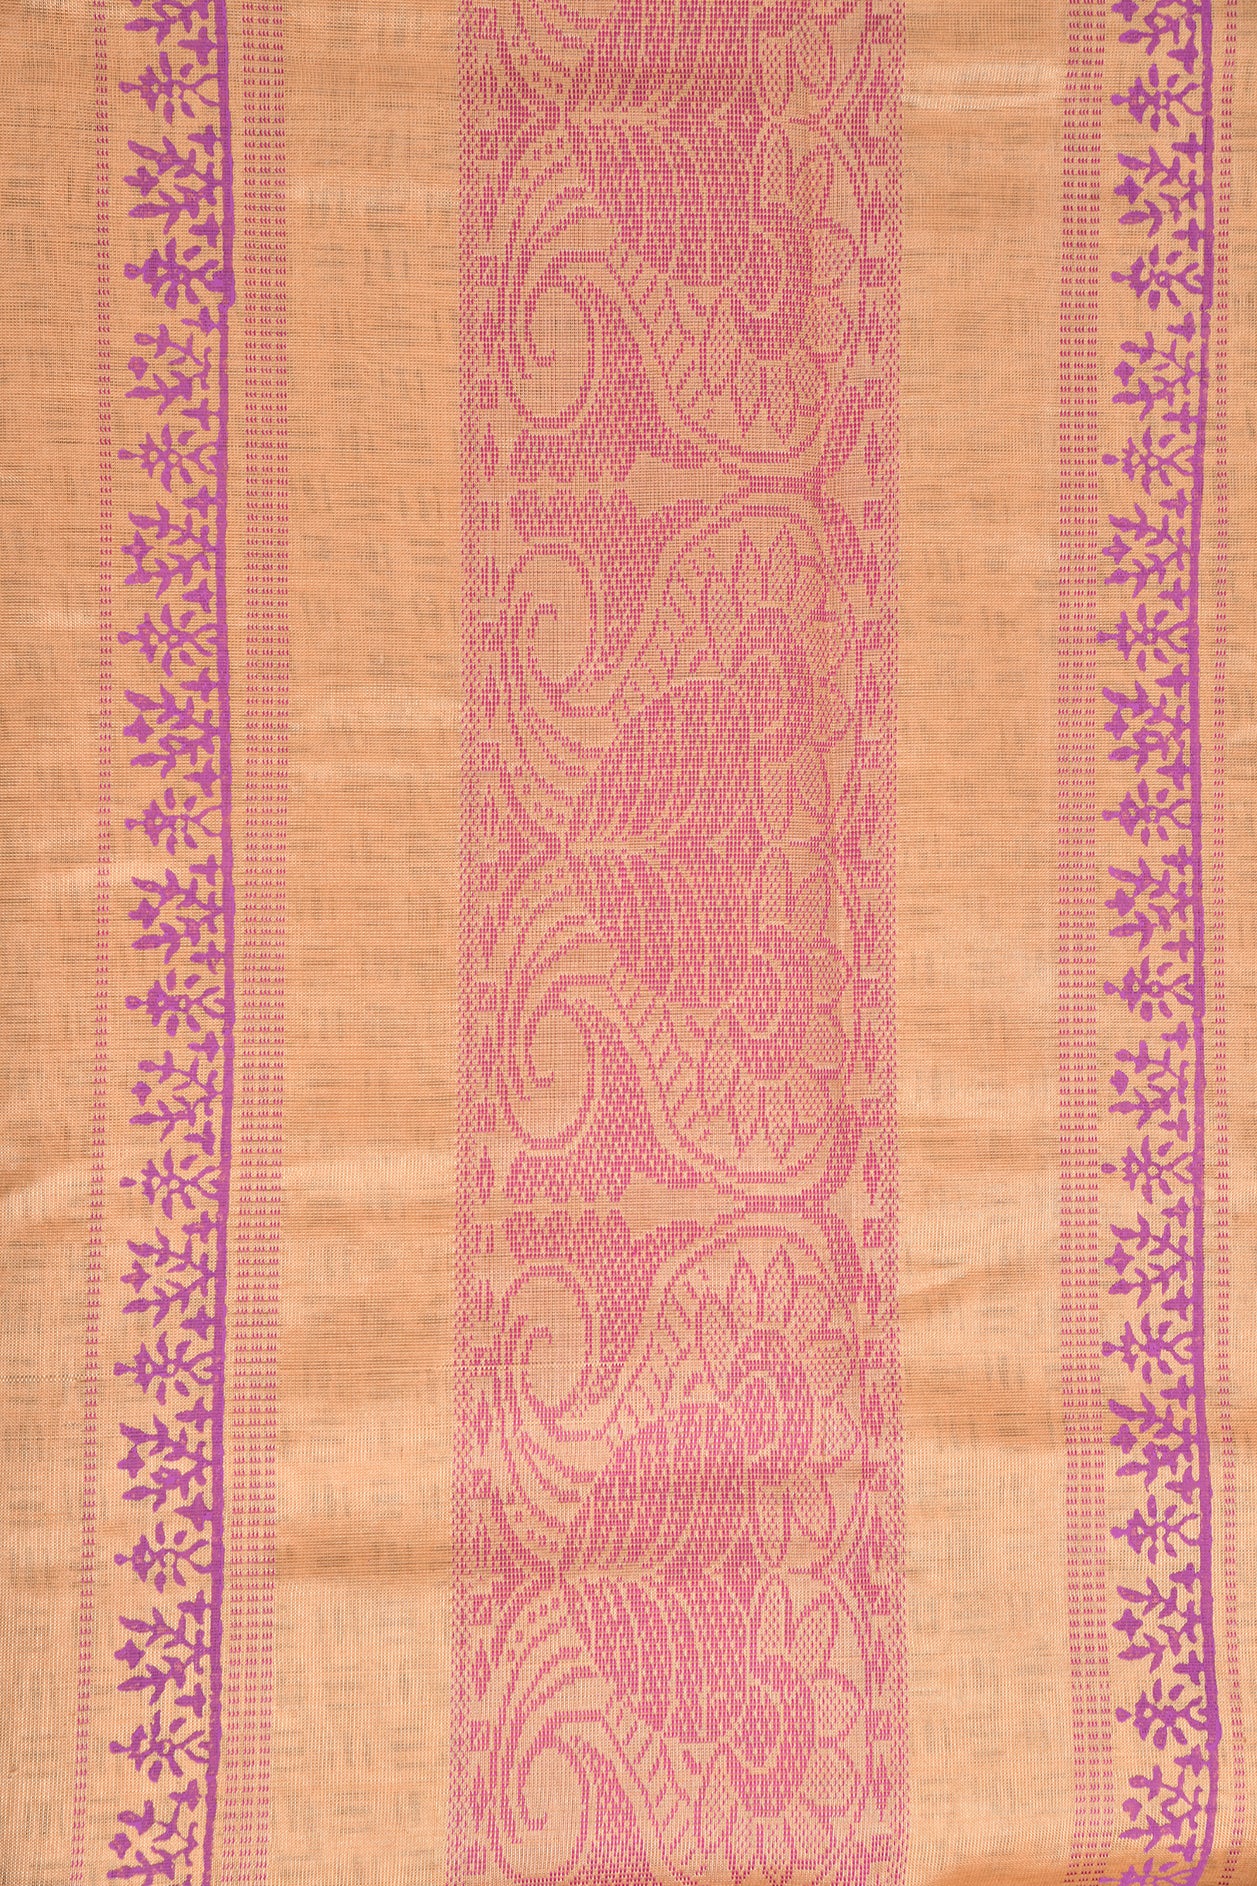 Floral Design Green Block Printed Silk Cotton Saree